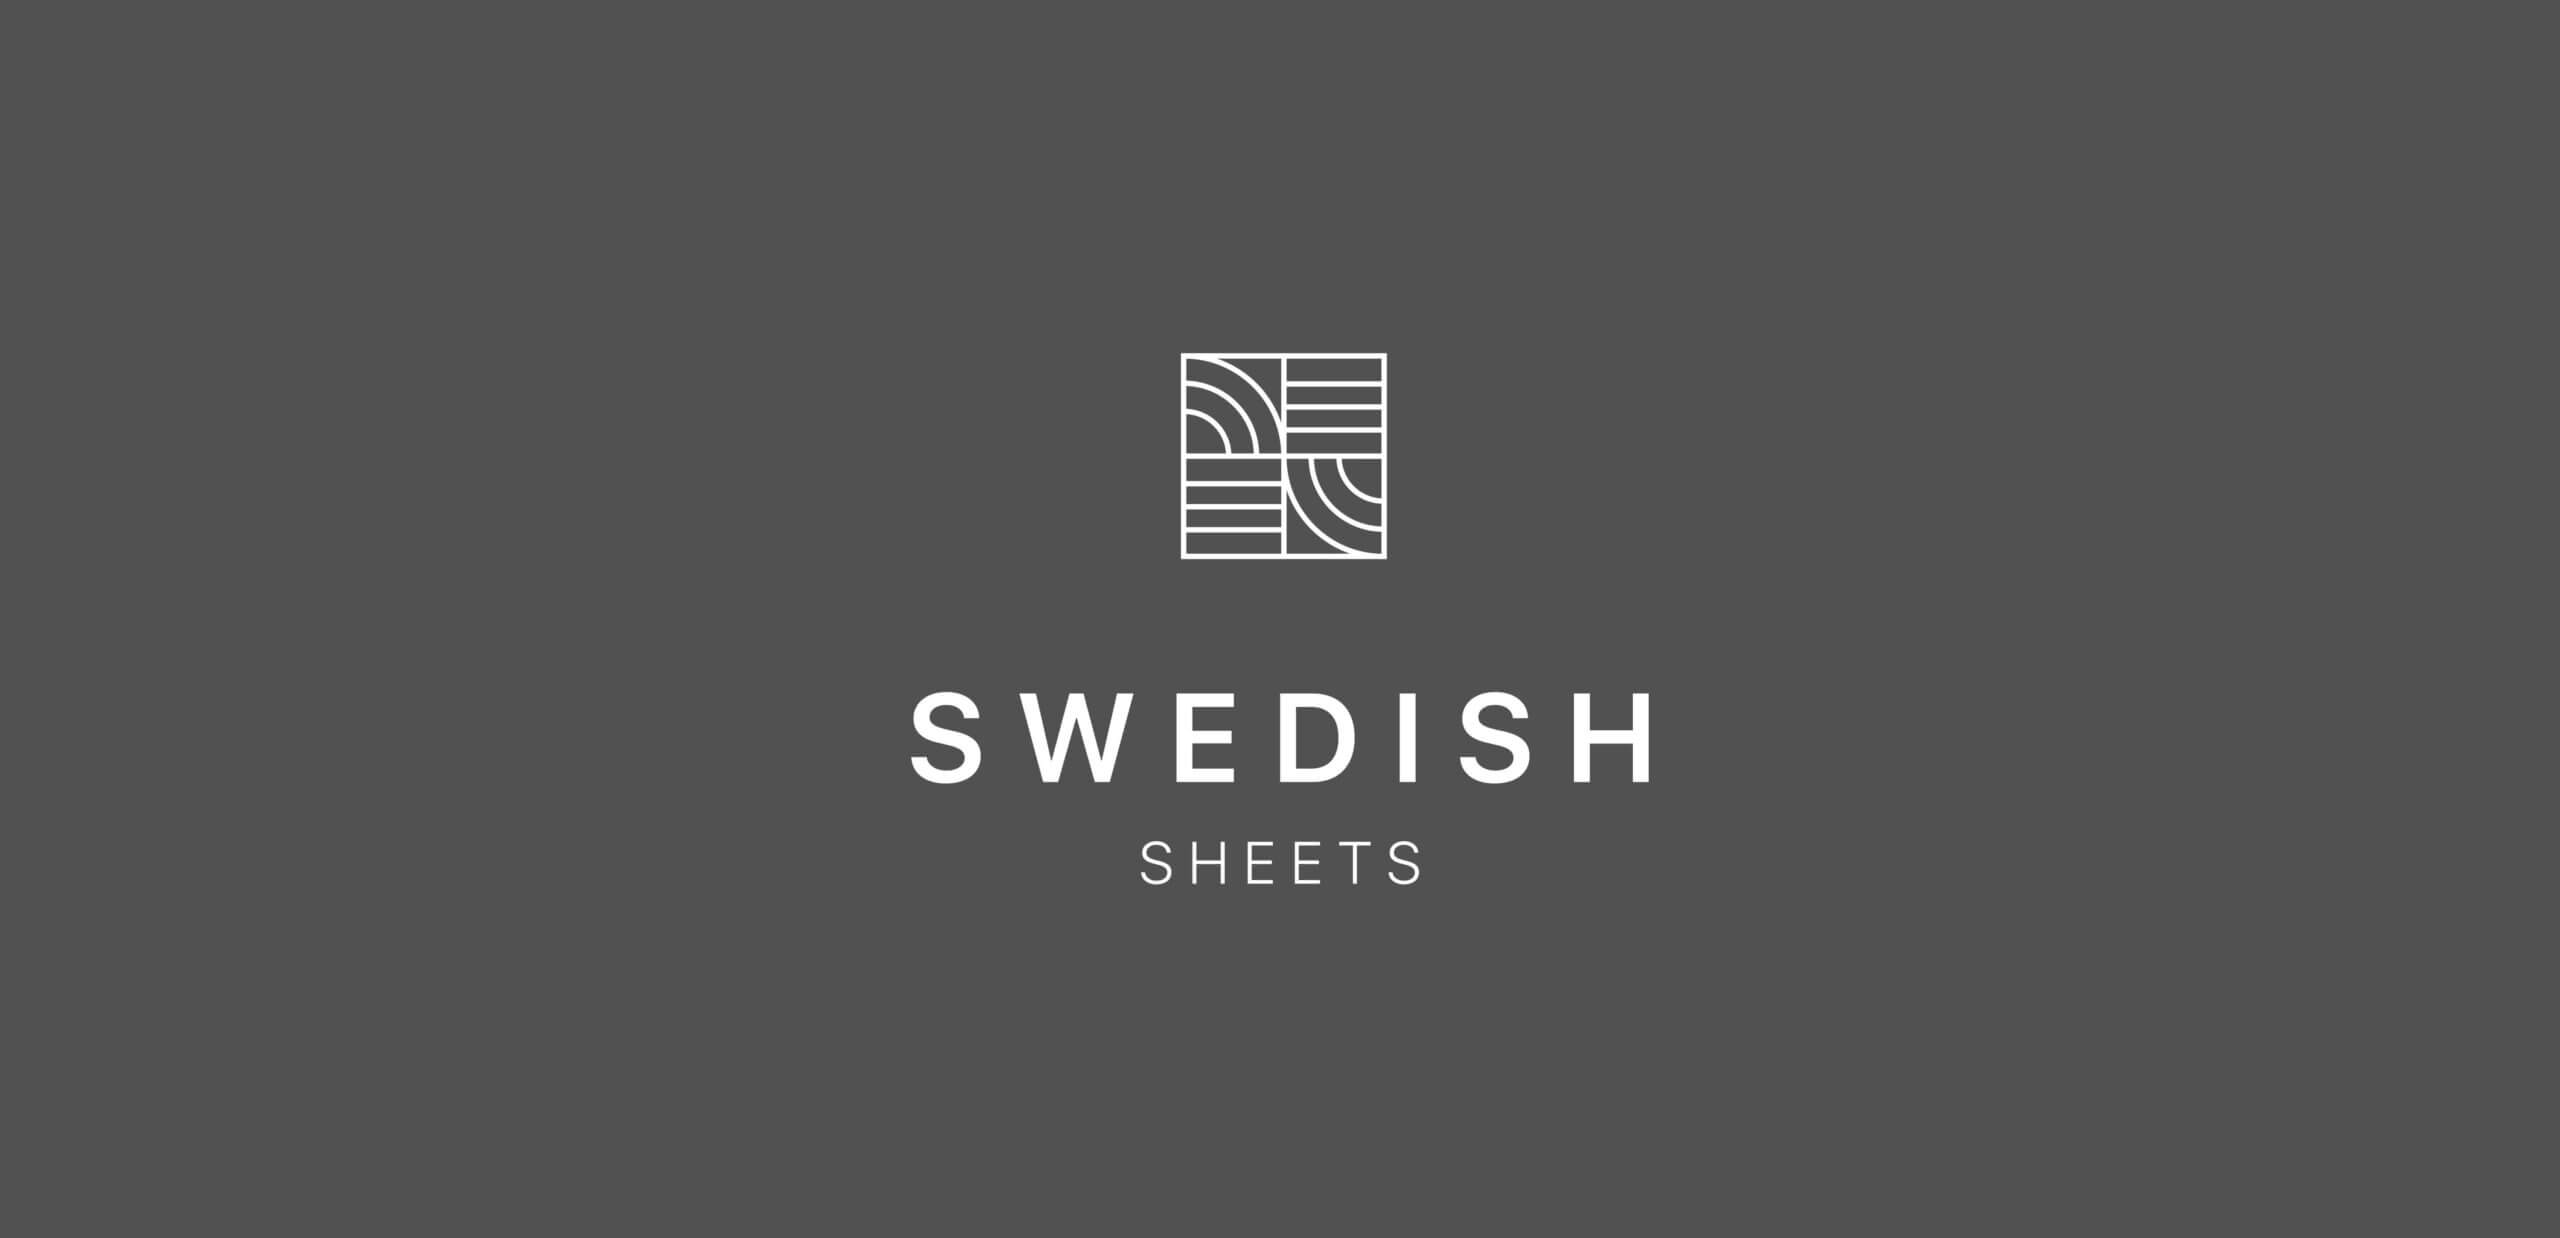 PM_swedishsheets_logo_1